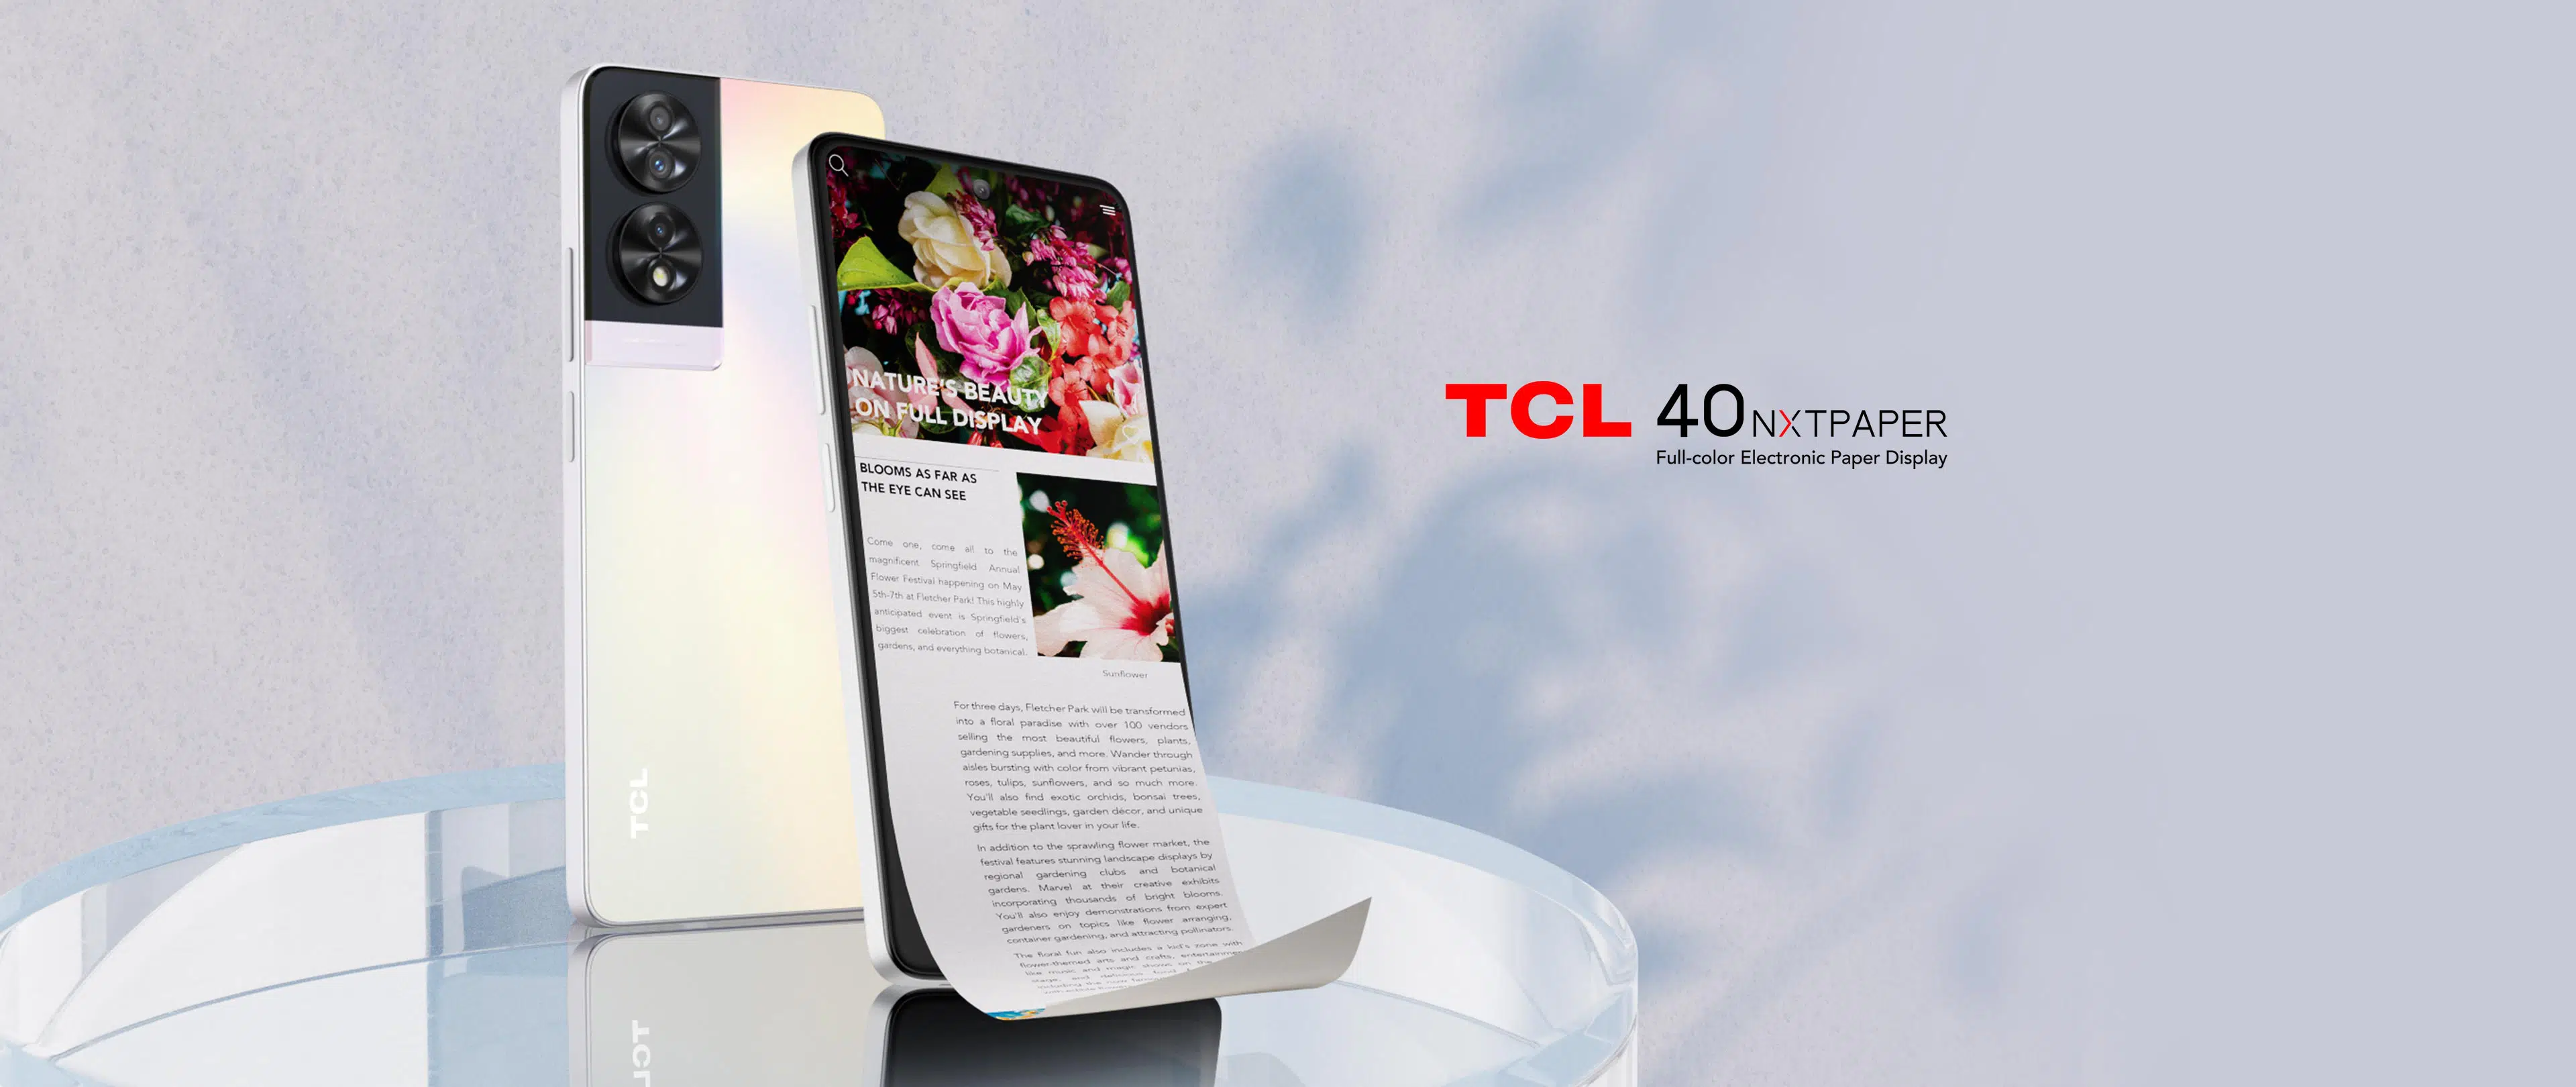 TCL lança smartphone NXTPAPER com tela e-ink colorida similar ao Kindle